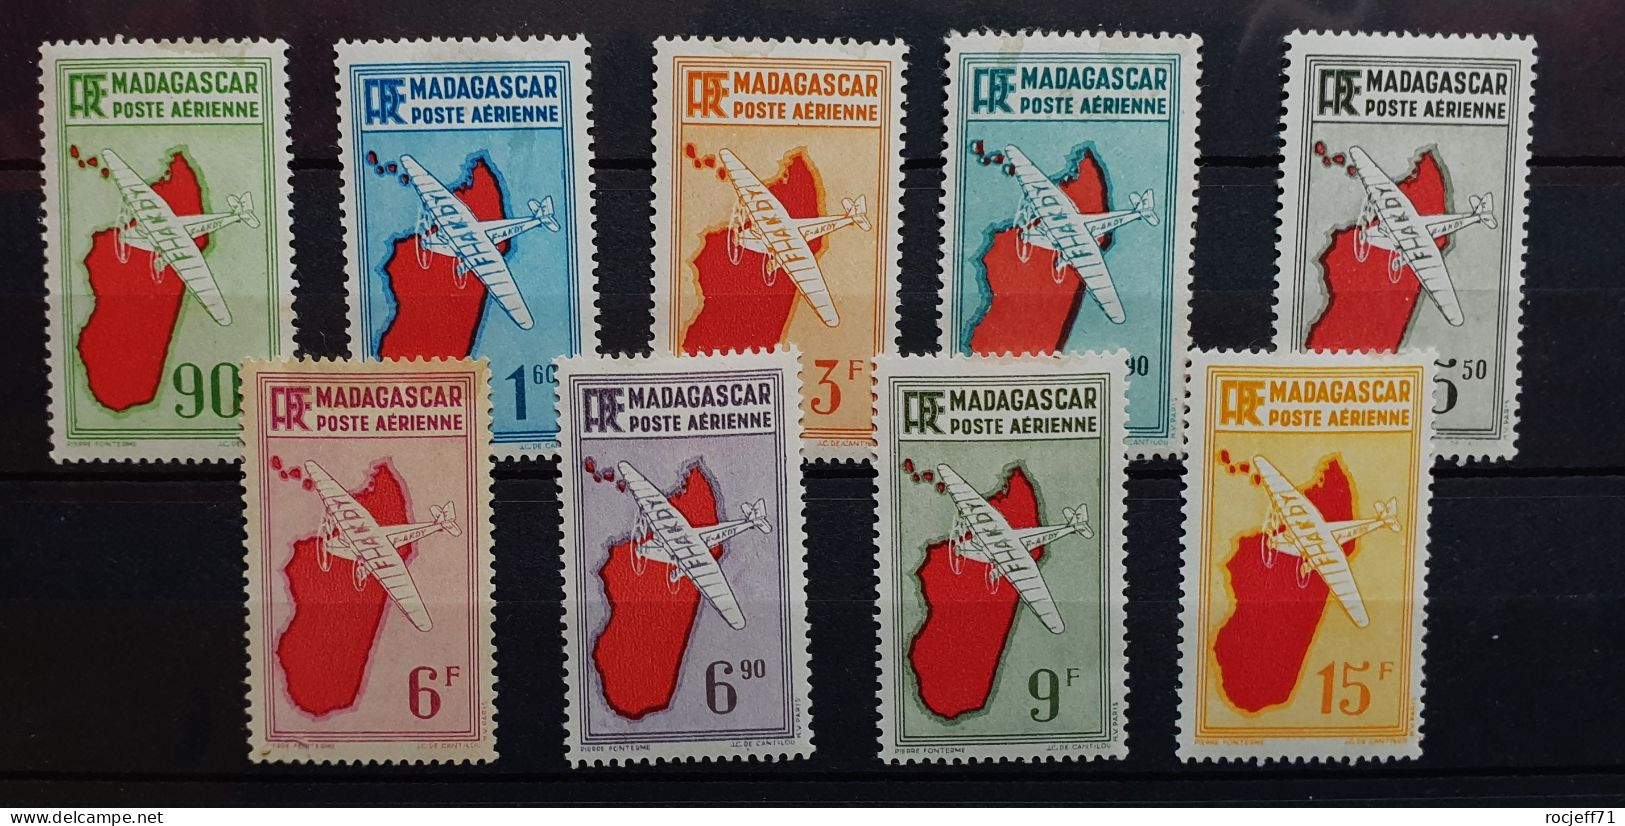 04 - 24 - Madagascar - Poste Aérienne N°16 à 24 * - MH - Série Complète - Posta Aerea